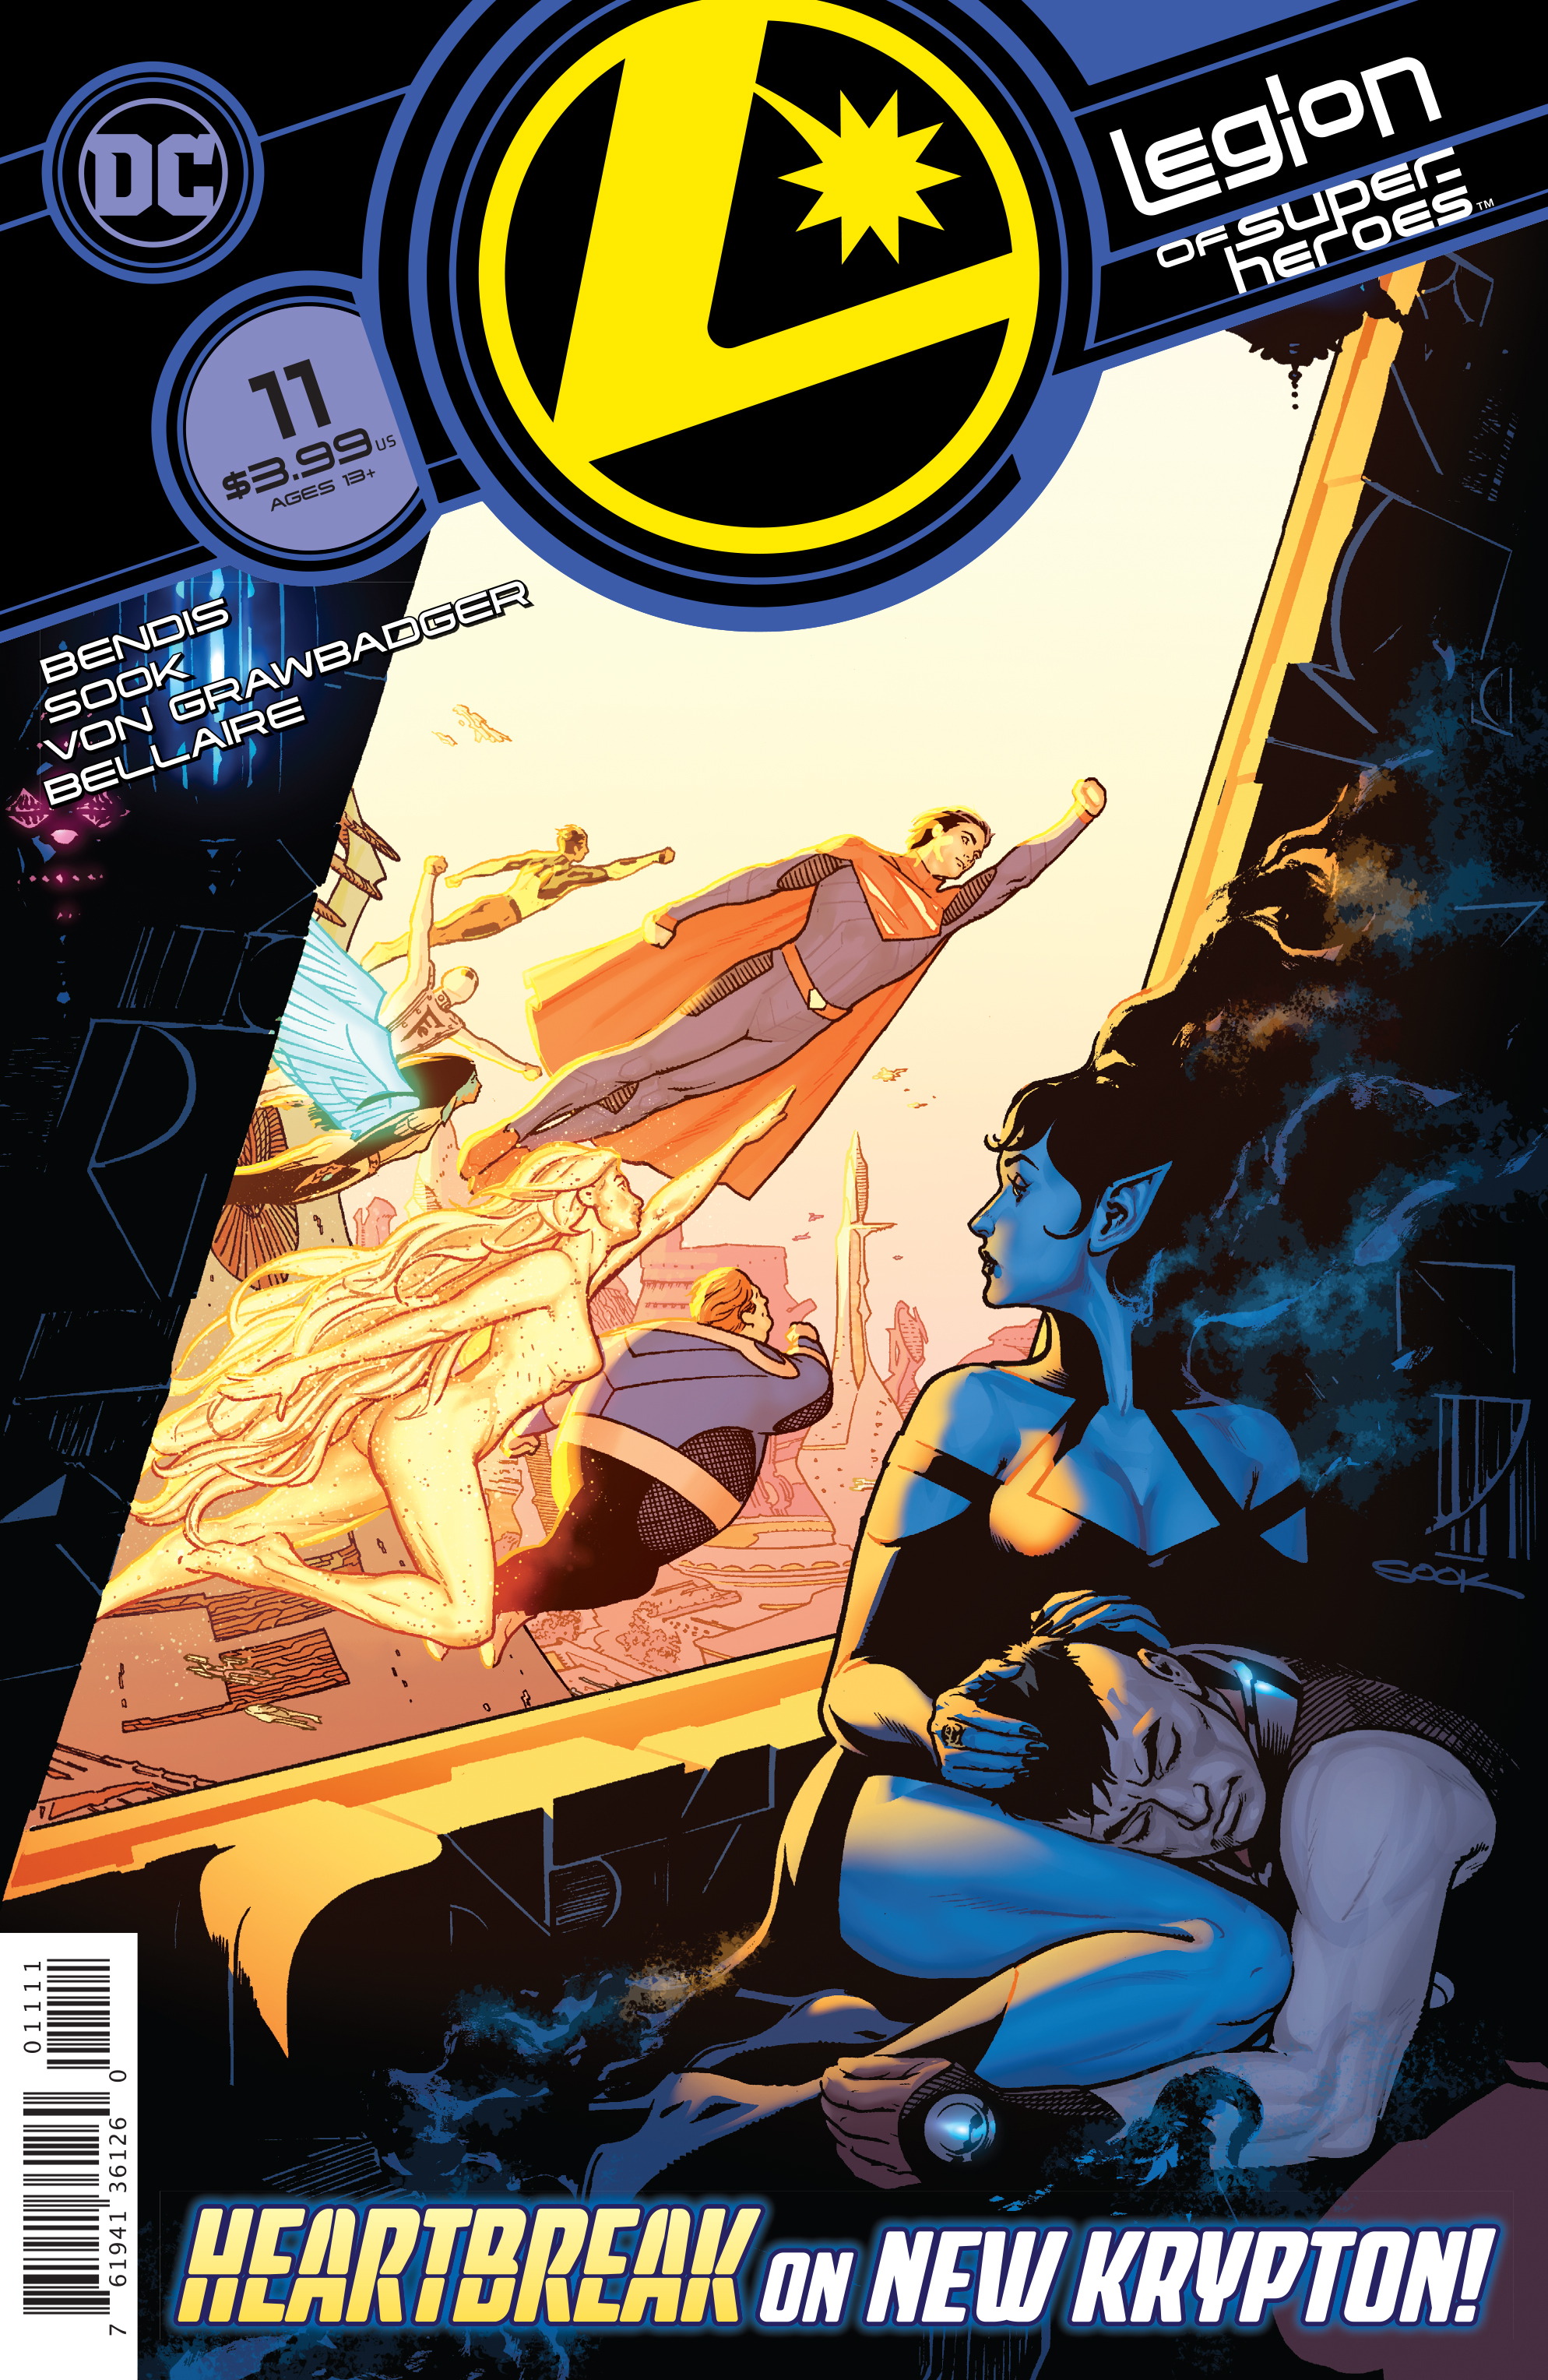 Legion of Super-Heroes #11 Cover A Ryan Sook (2019)